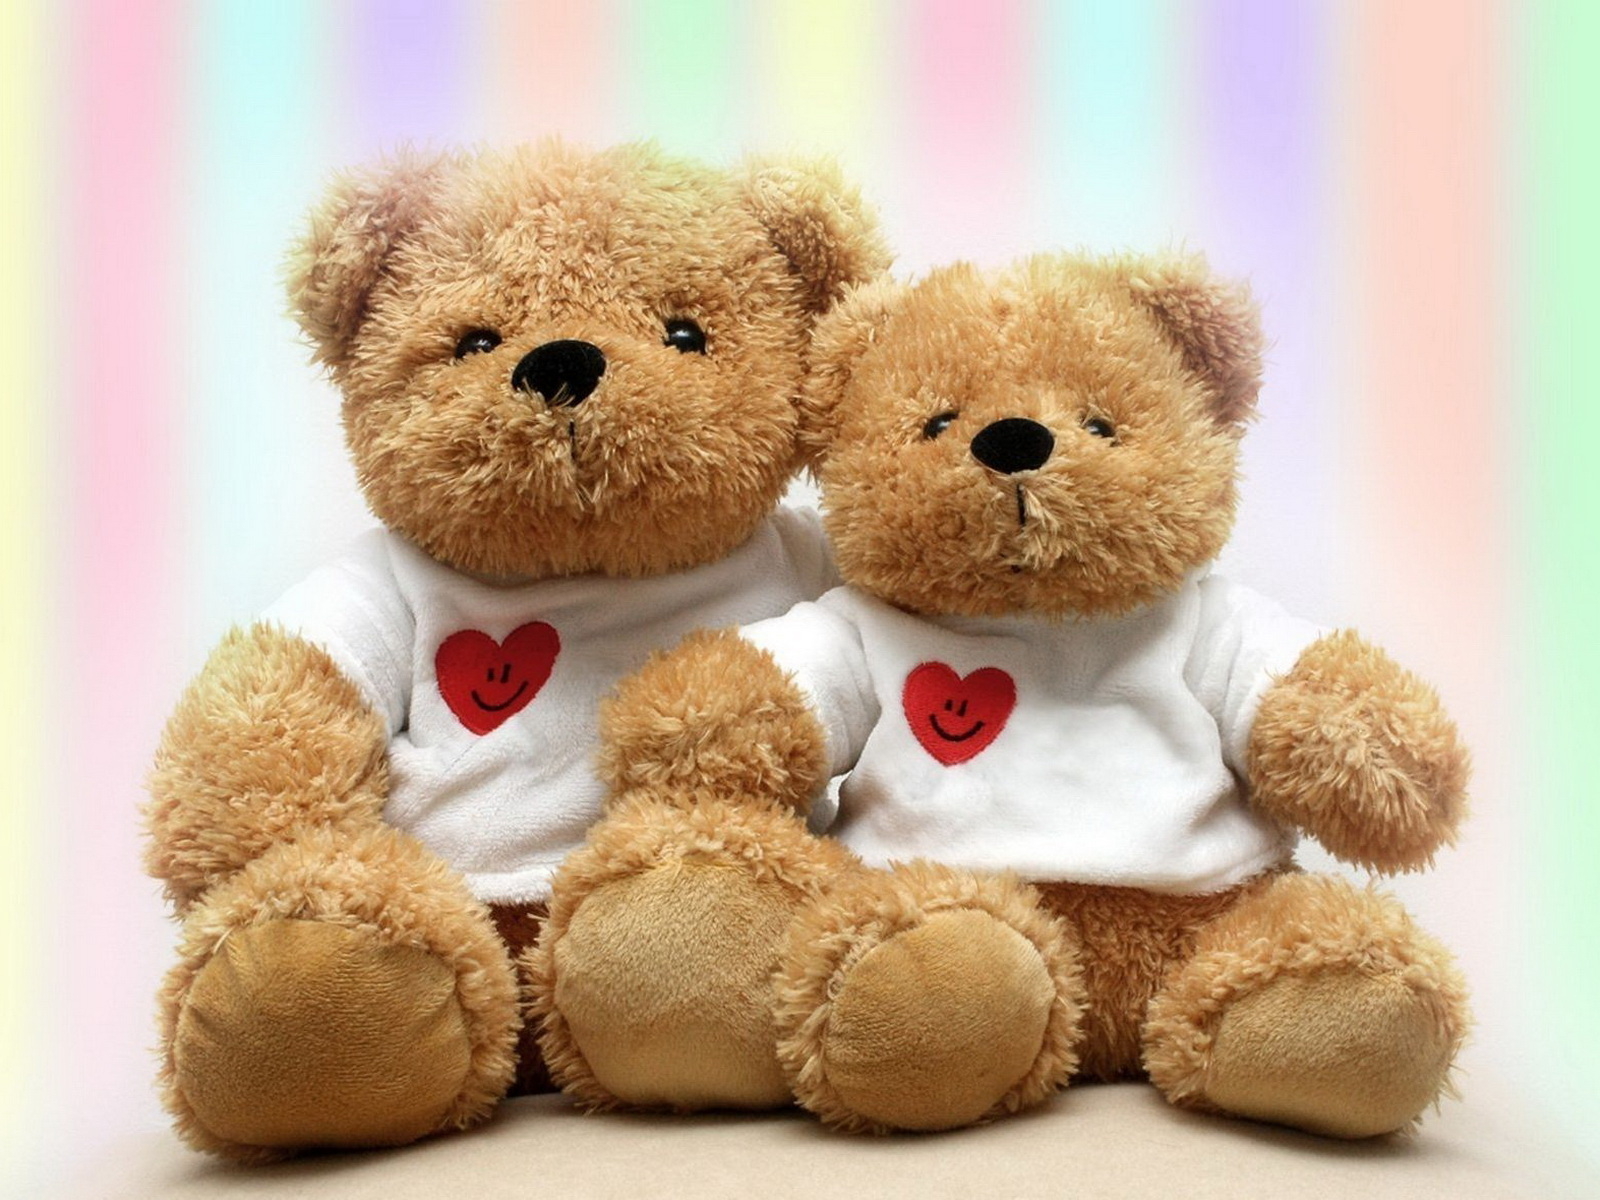 latest teddy bears wallpaper, stuffed toy, teddy bear, toy, plush, textile, love, valentine's day, bear